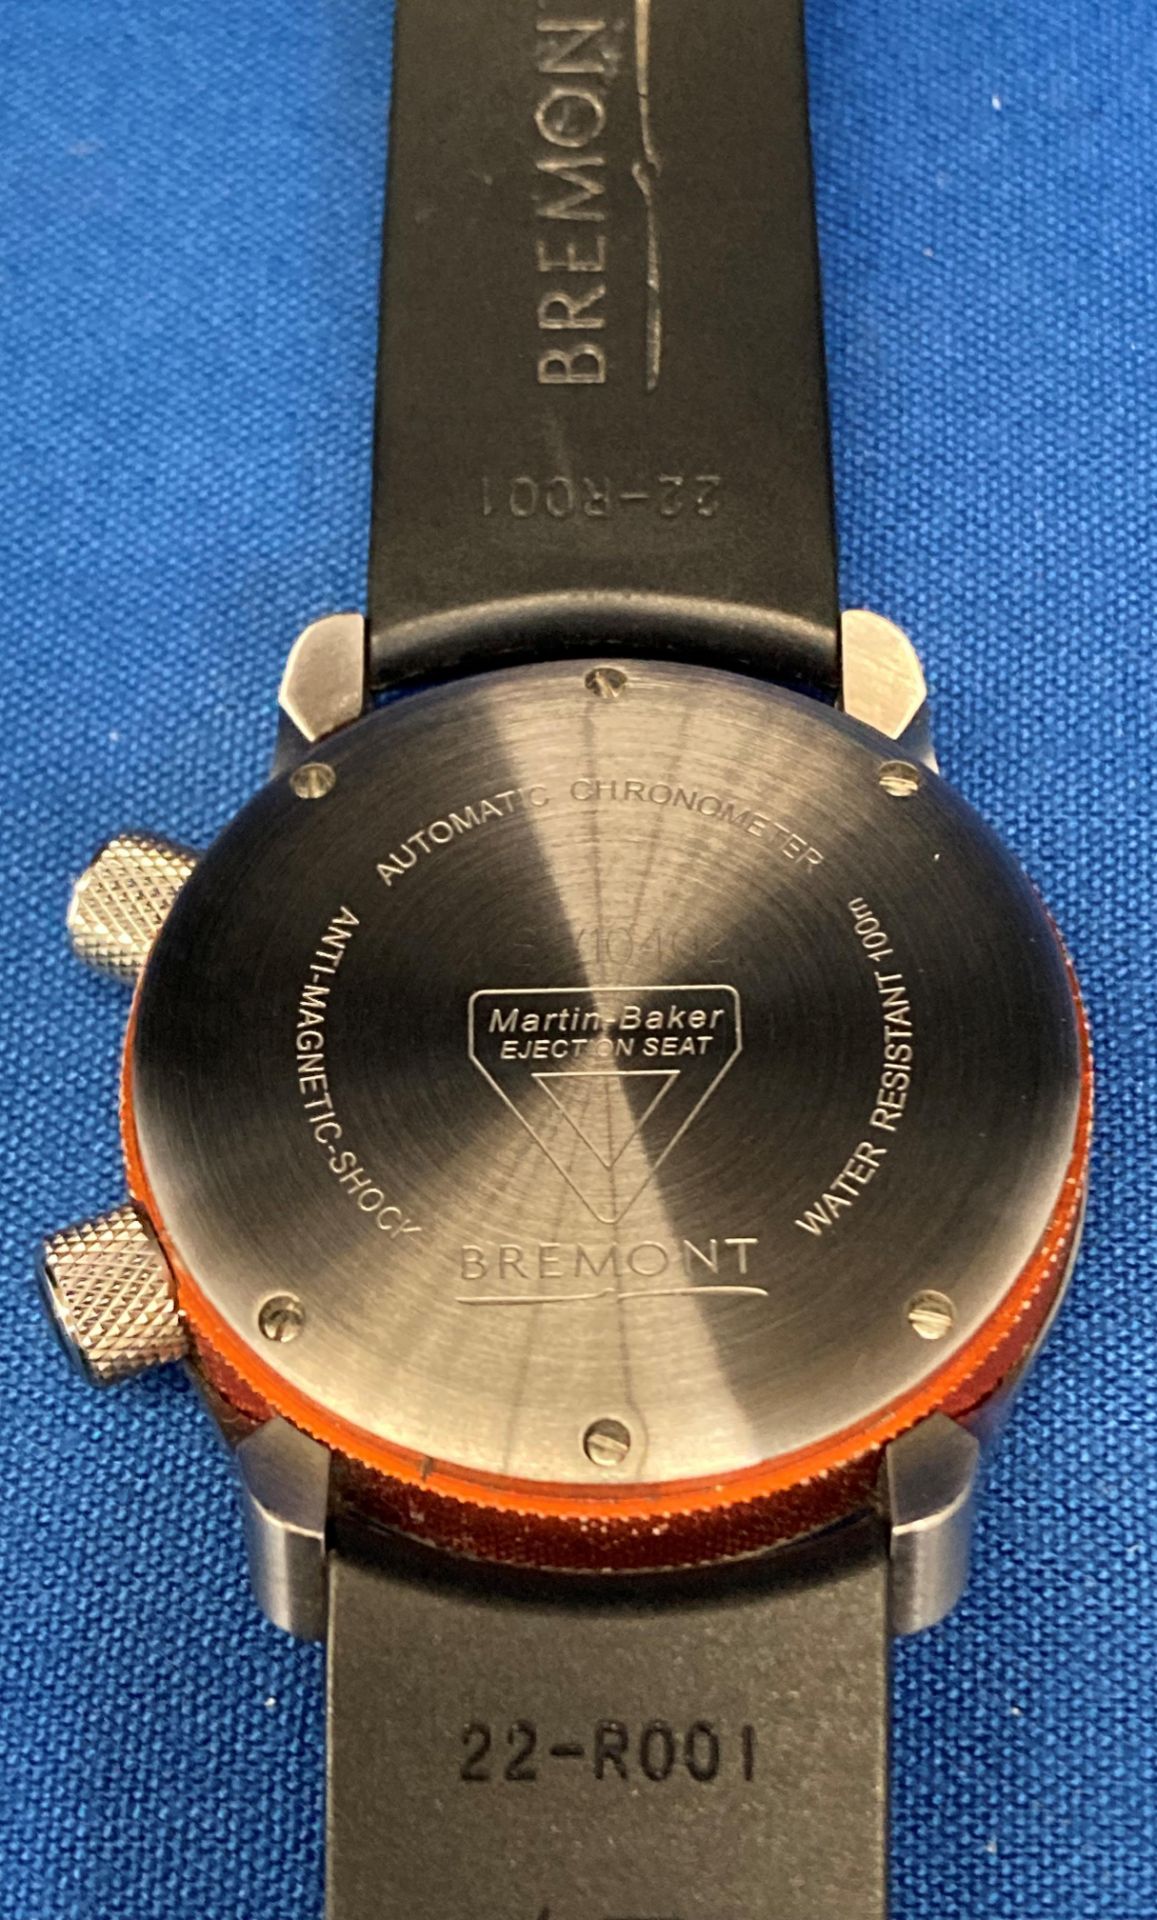 A Bremont chronometer model: MB11-BK/OR, - Image 4 of 9